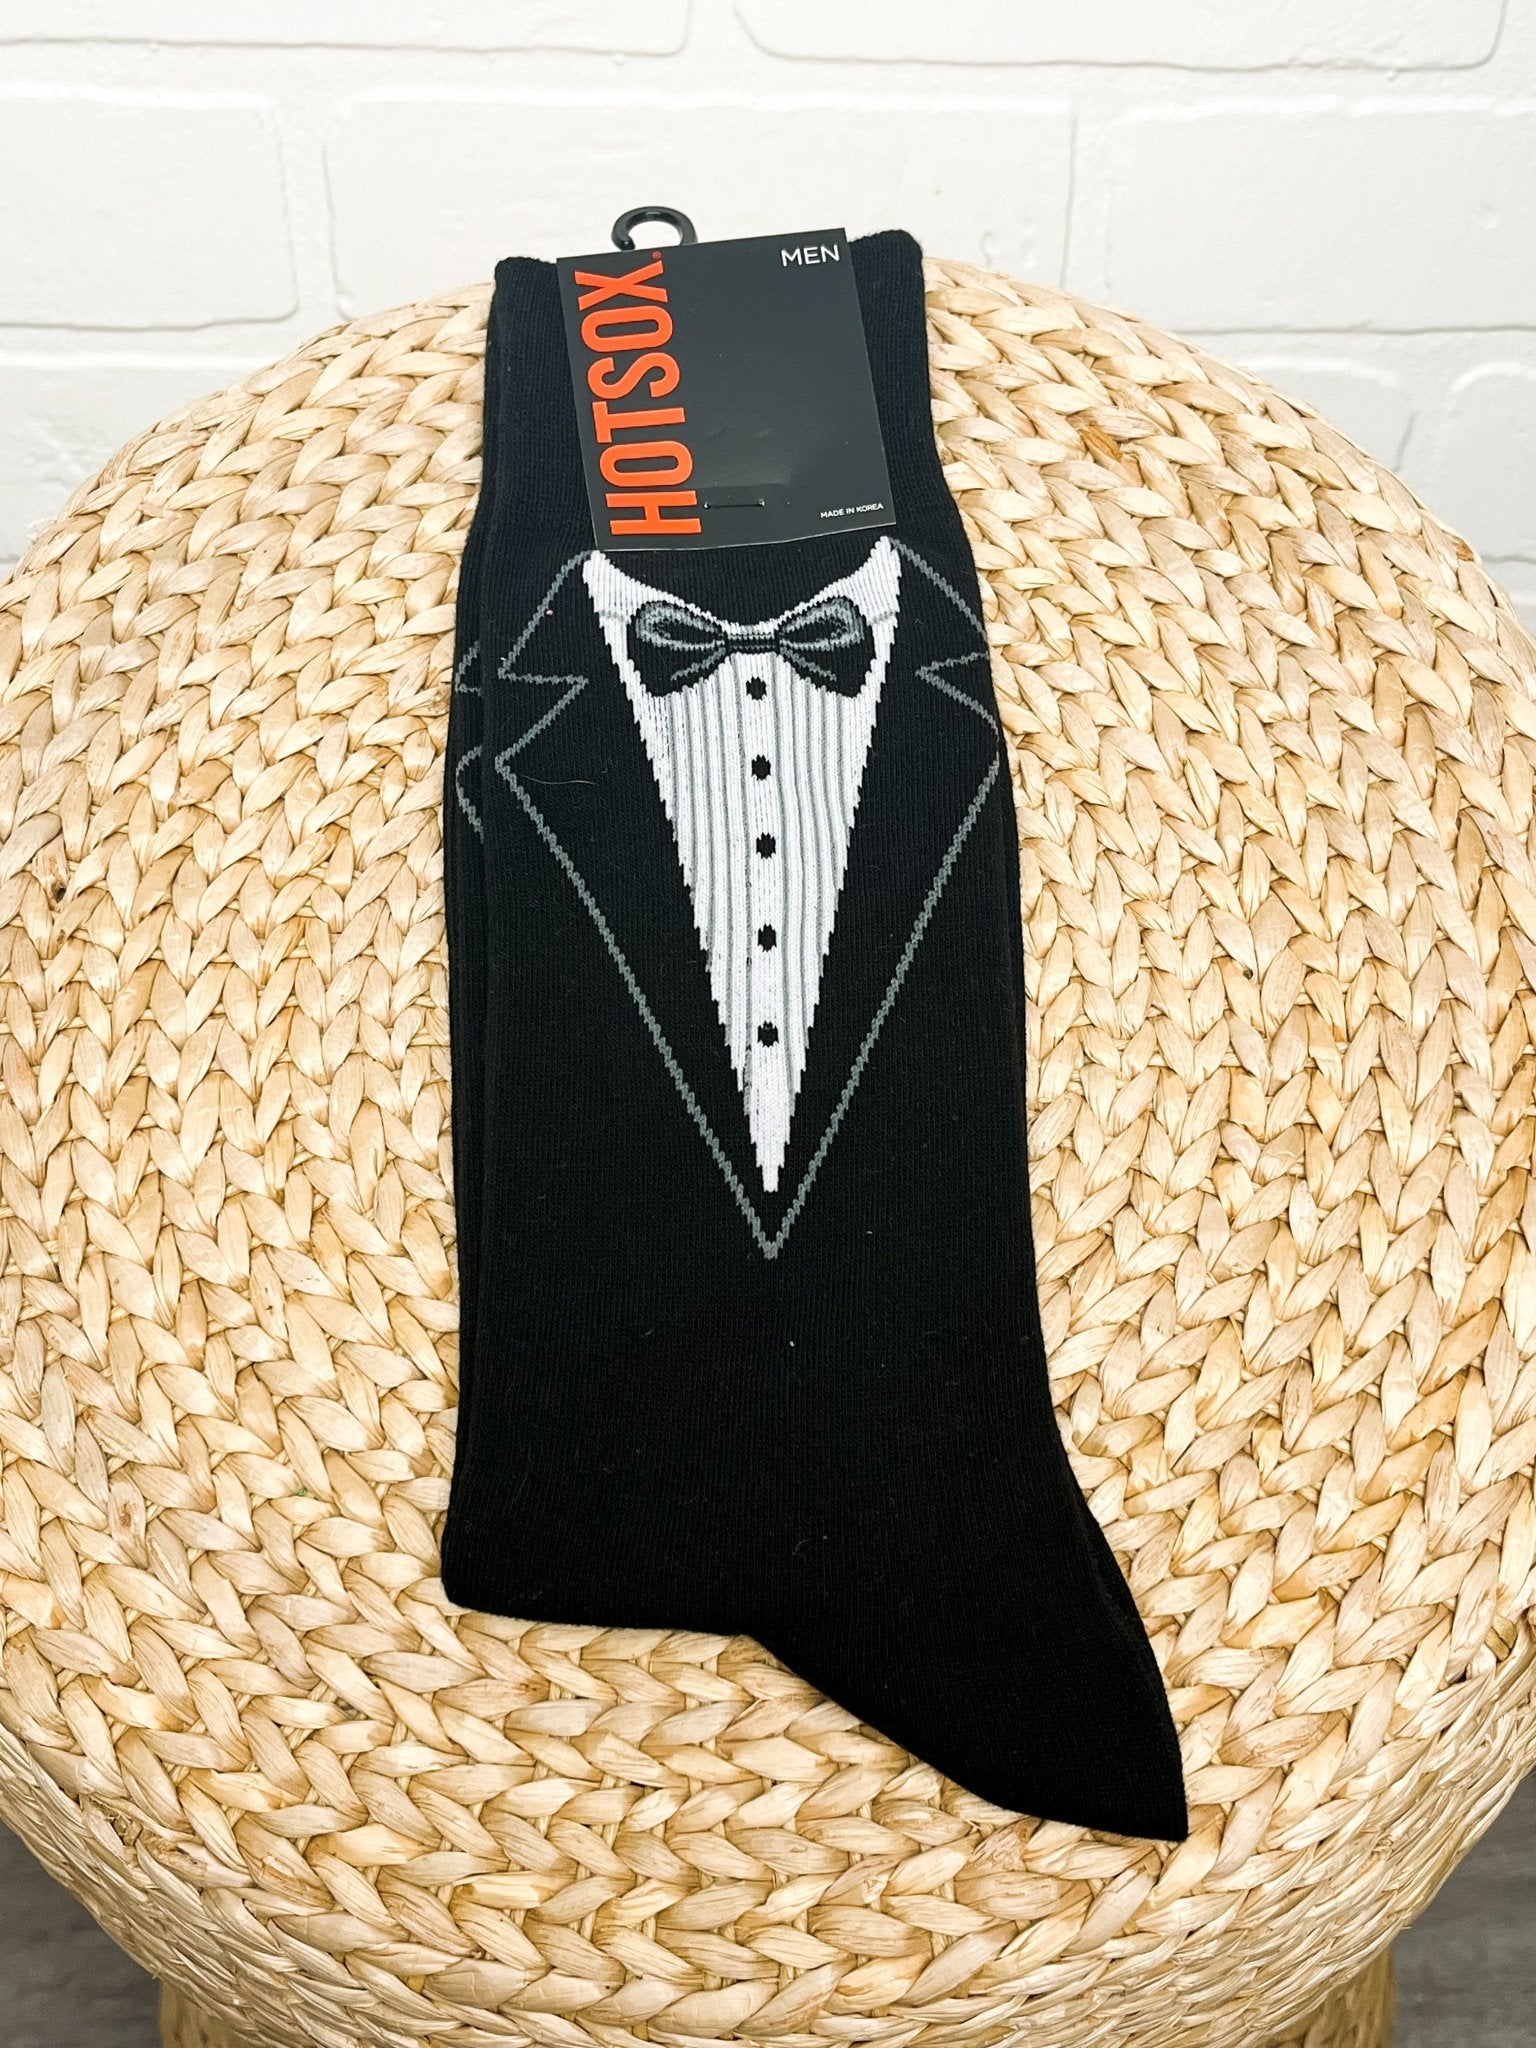 HotSox men's tuxedo sock black - Trendy Socks at Lush Fashion Lounge Boutique in Oklahoma City